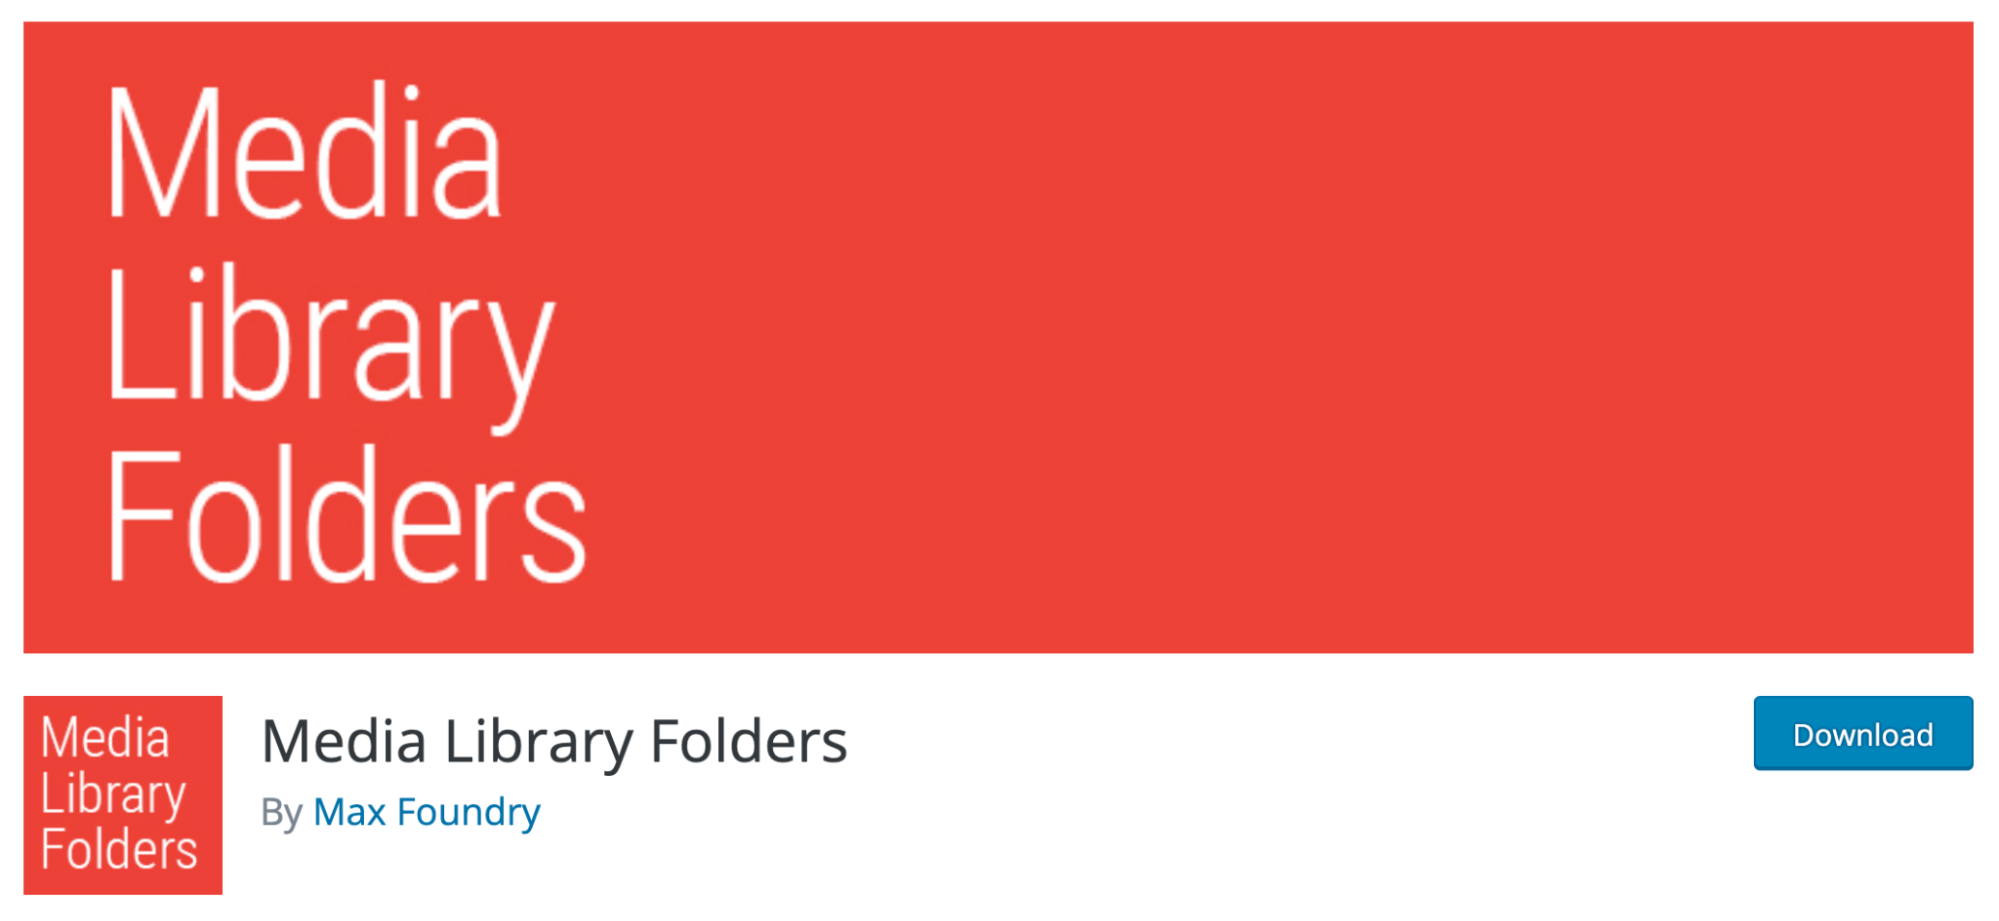 15 Media Library Folders